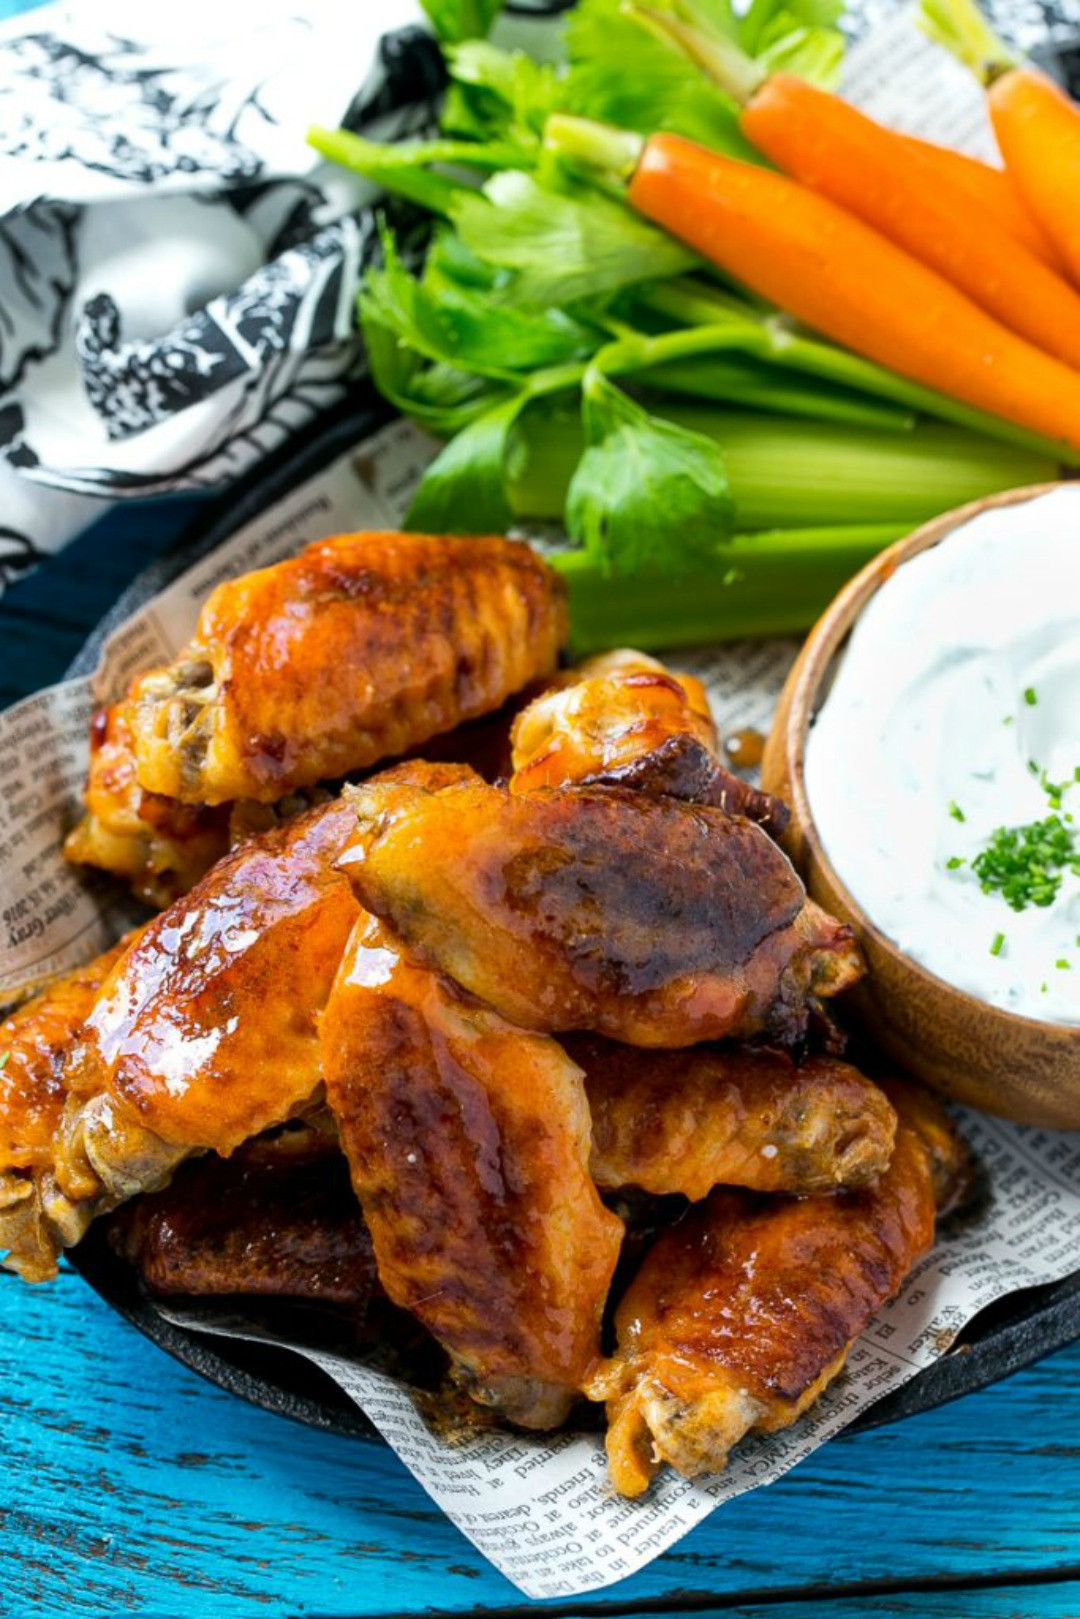 Super Bowl Chicken Wing Recipes
 Finger licking Chicken Wing Recipes for Your Super Bowl Party